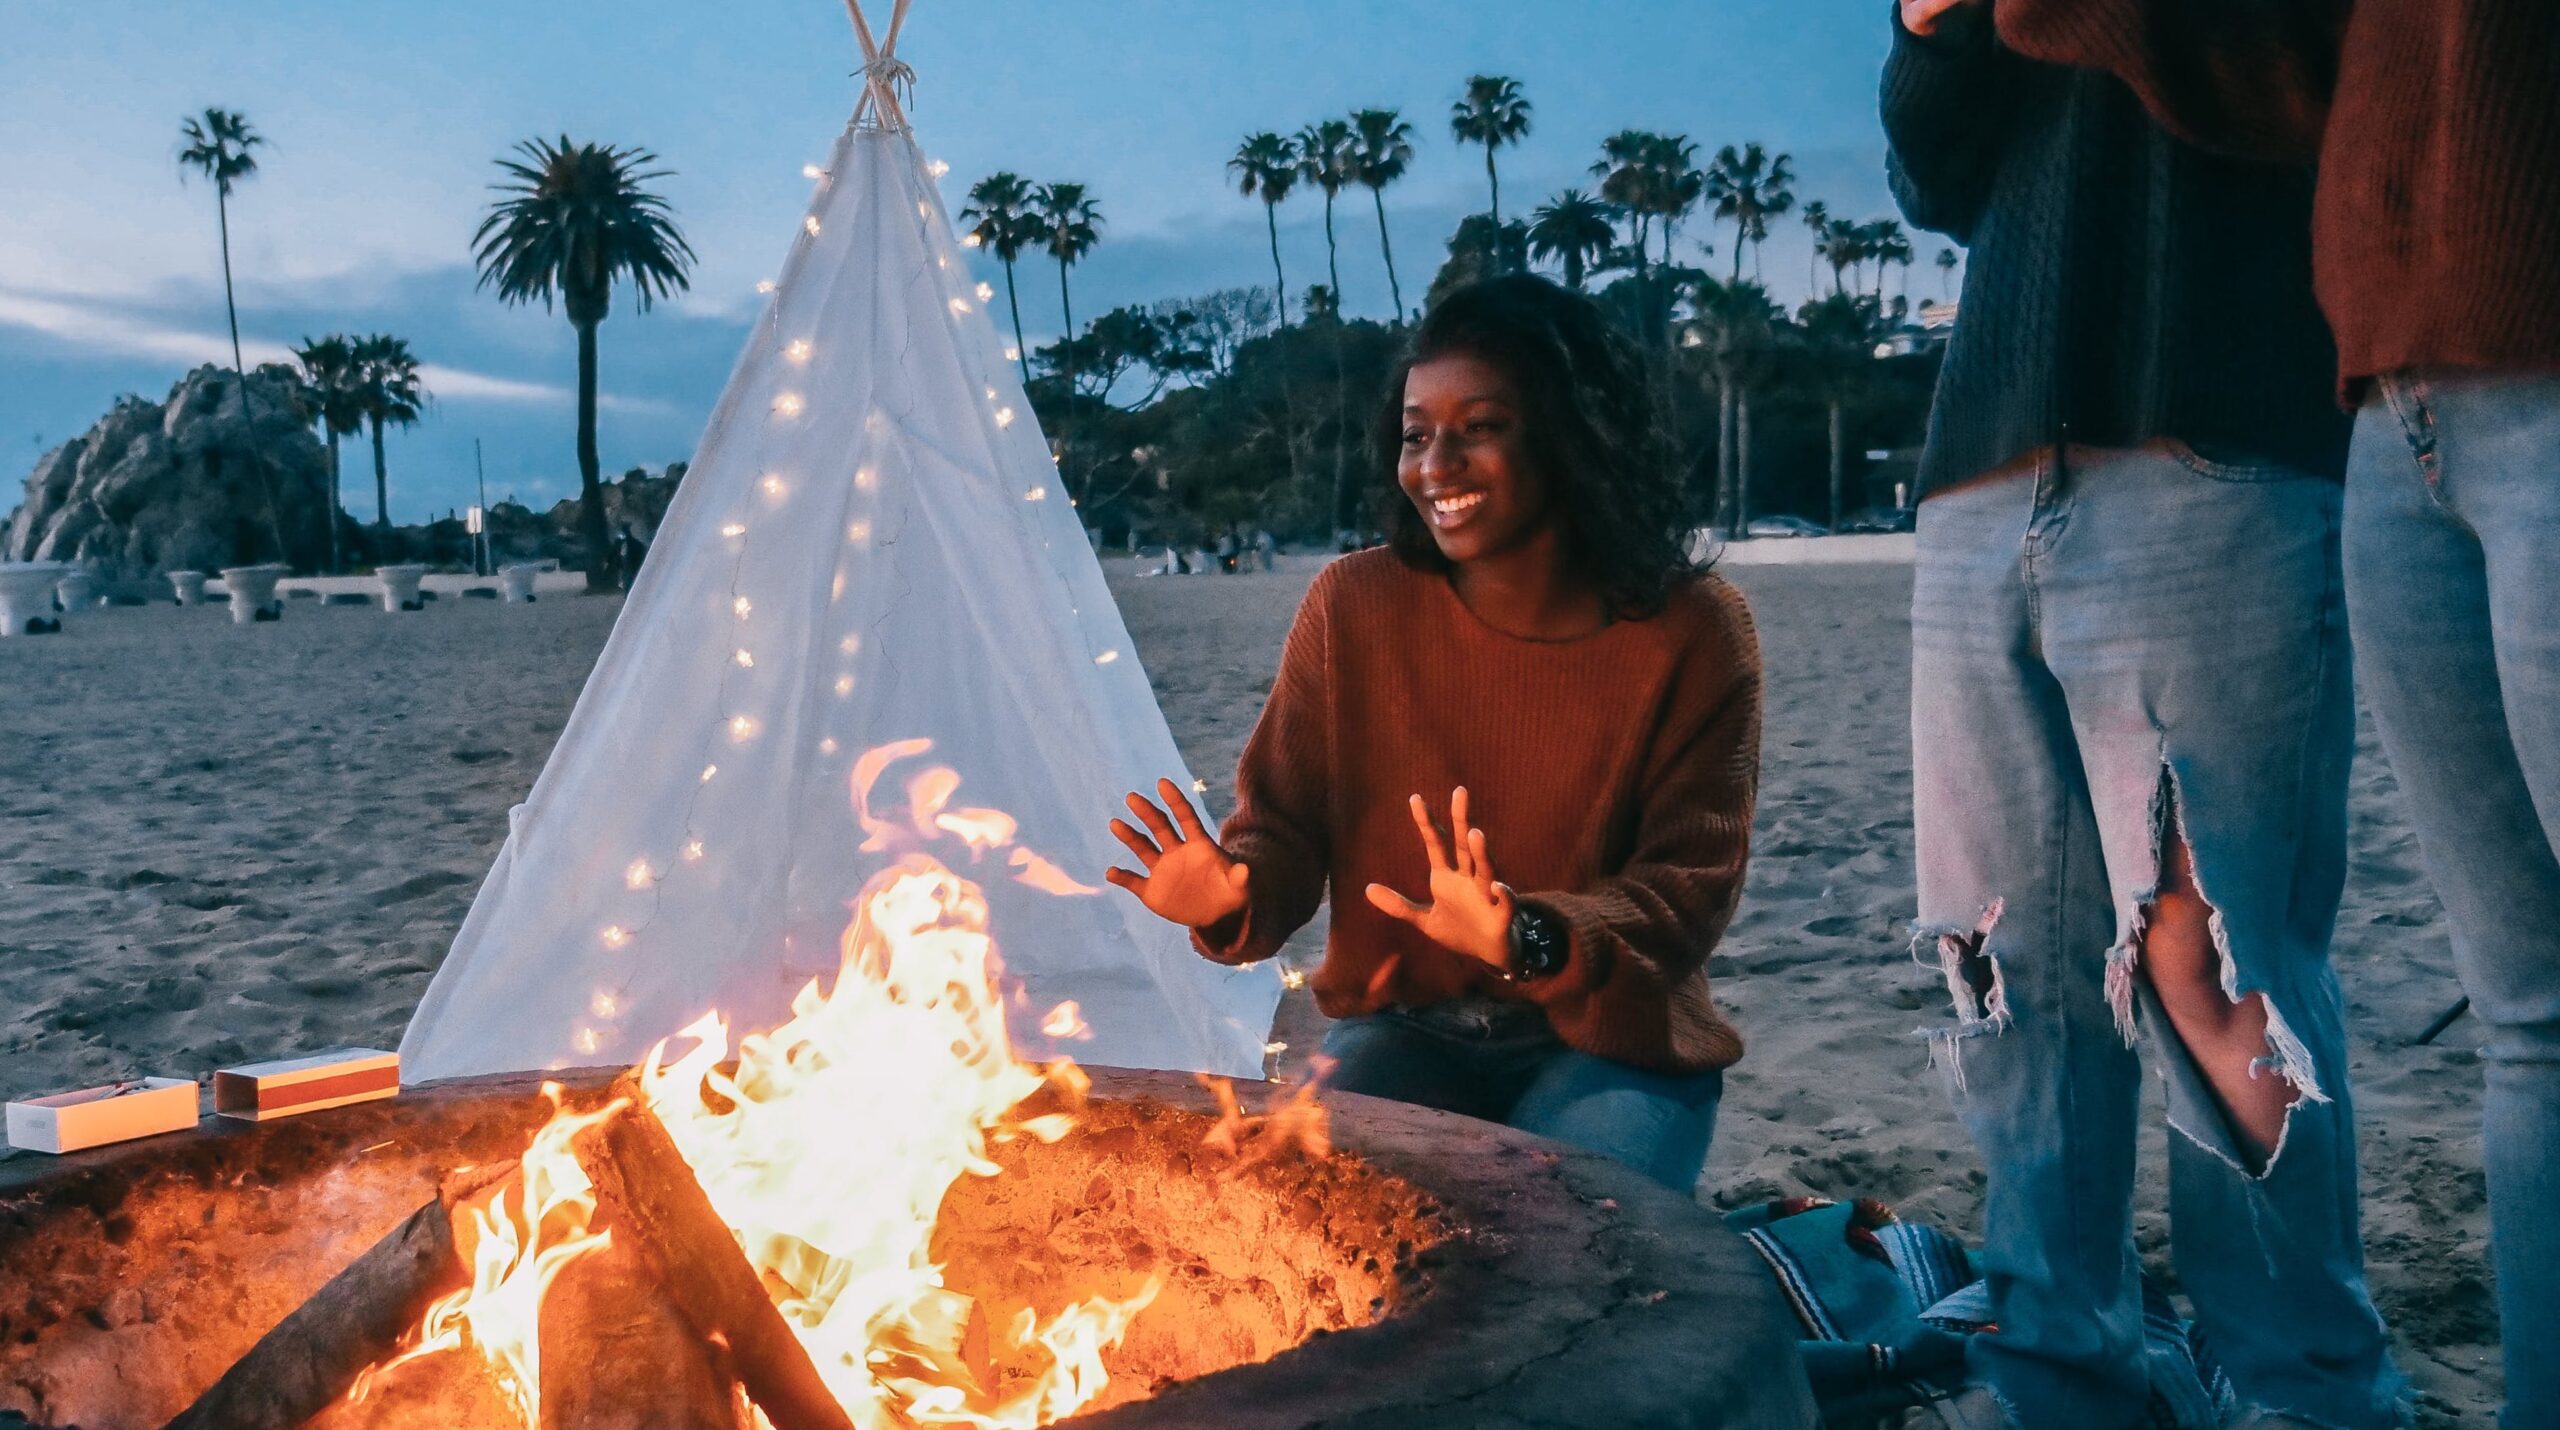 woman enjoying a bonfire on the beach with friends